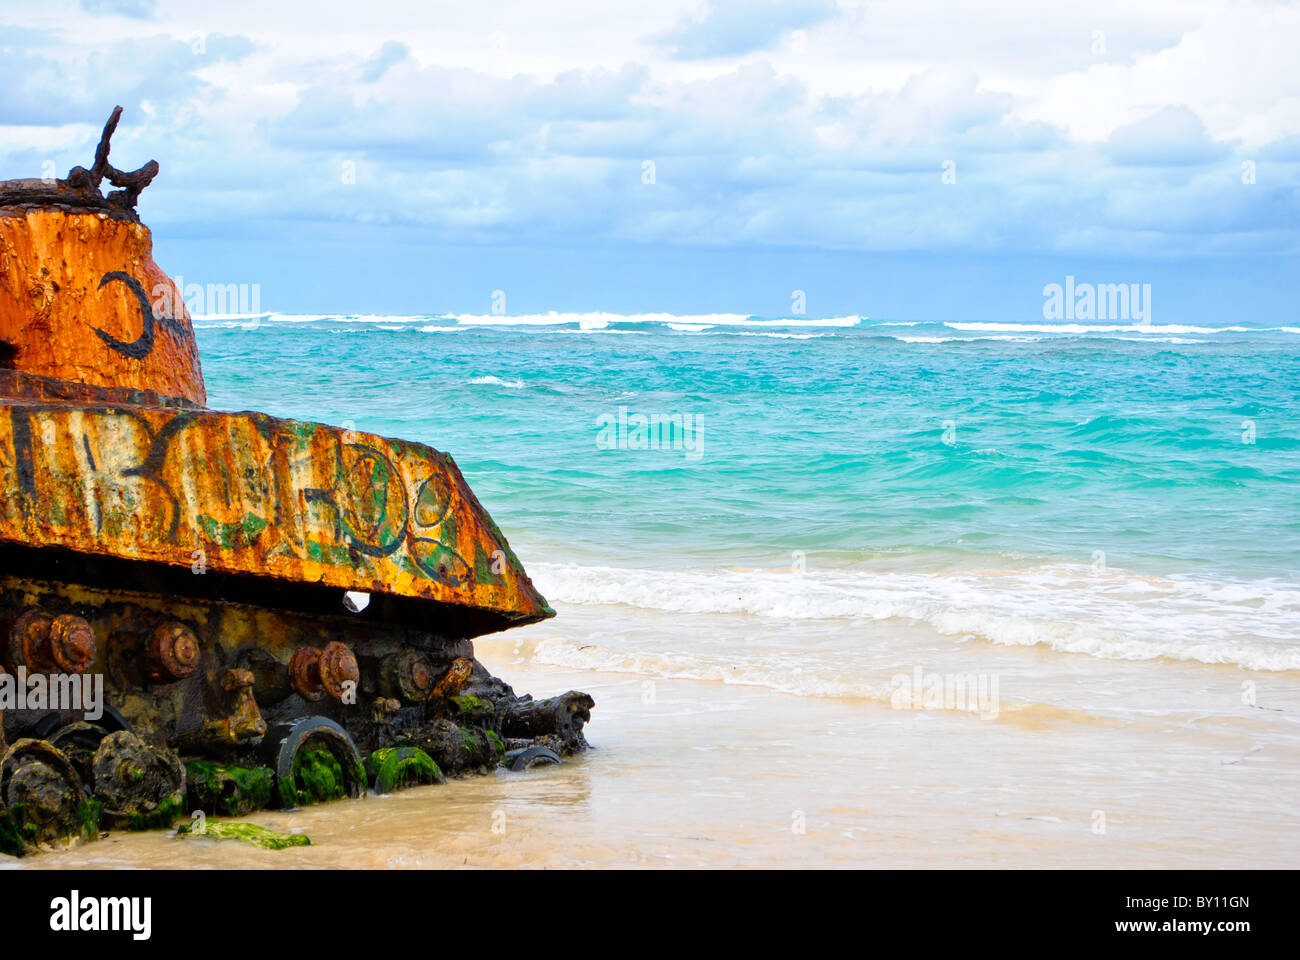 Tank on the beach. Stock Photo